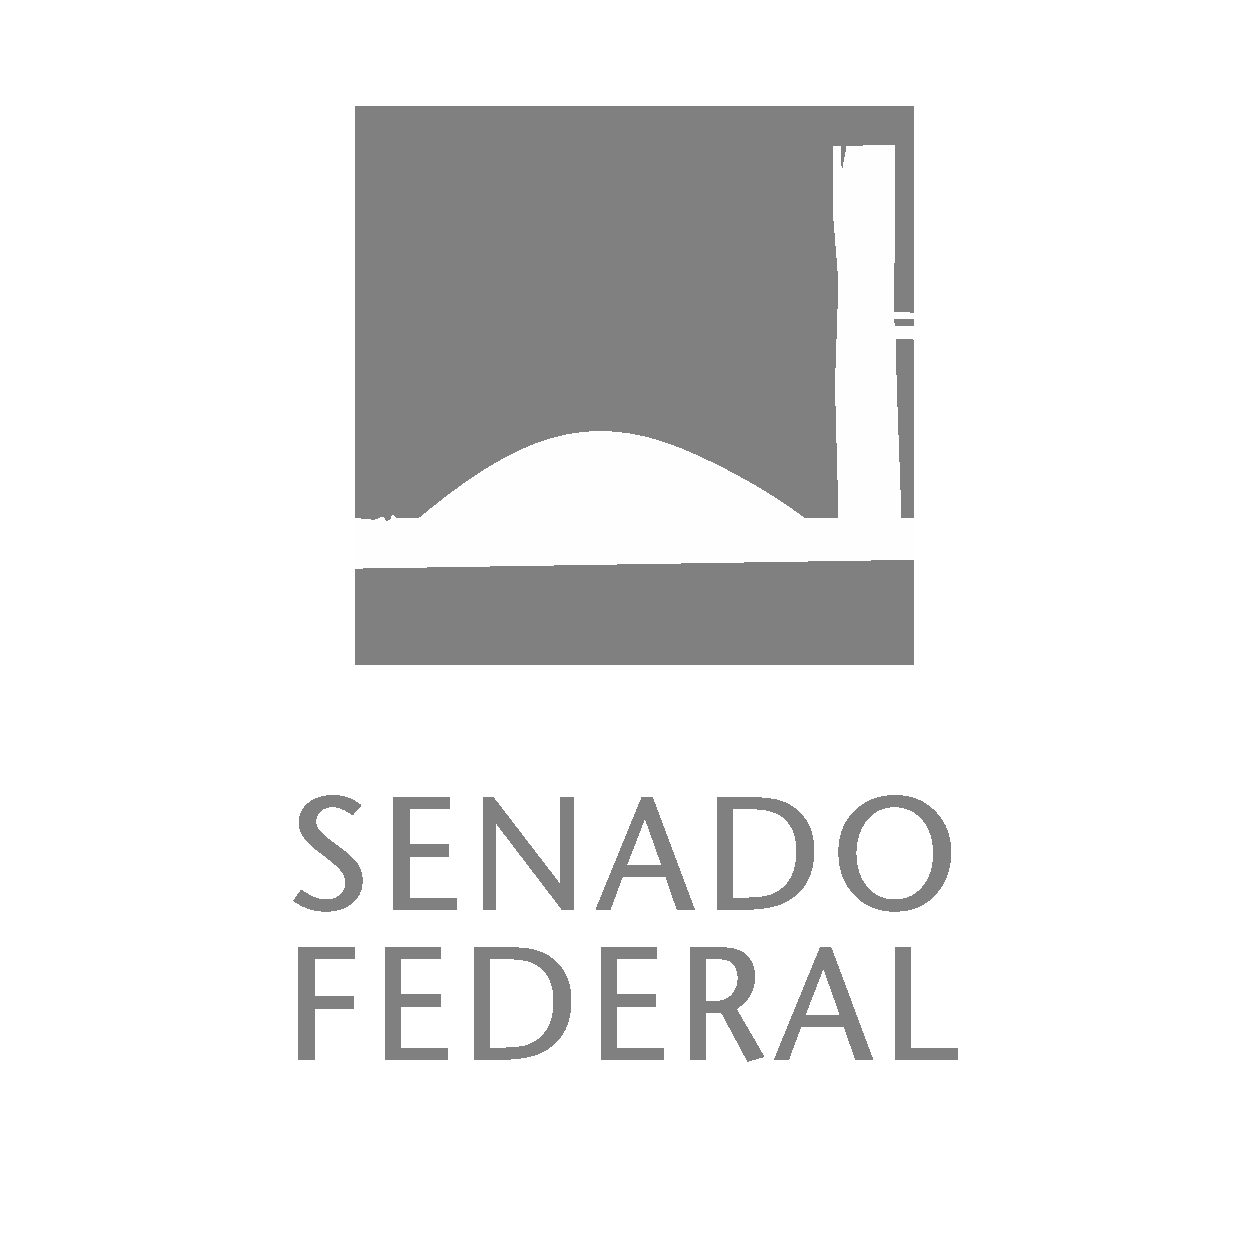 Federal Senate